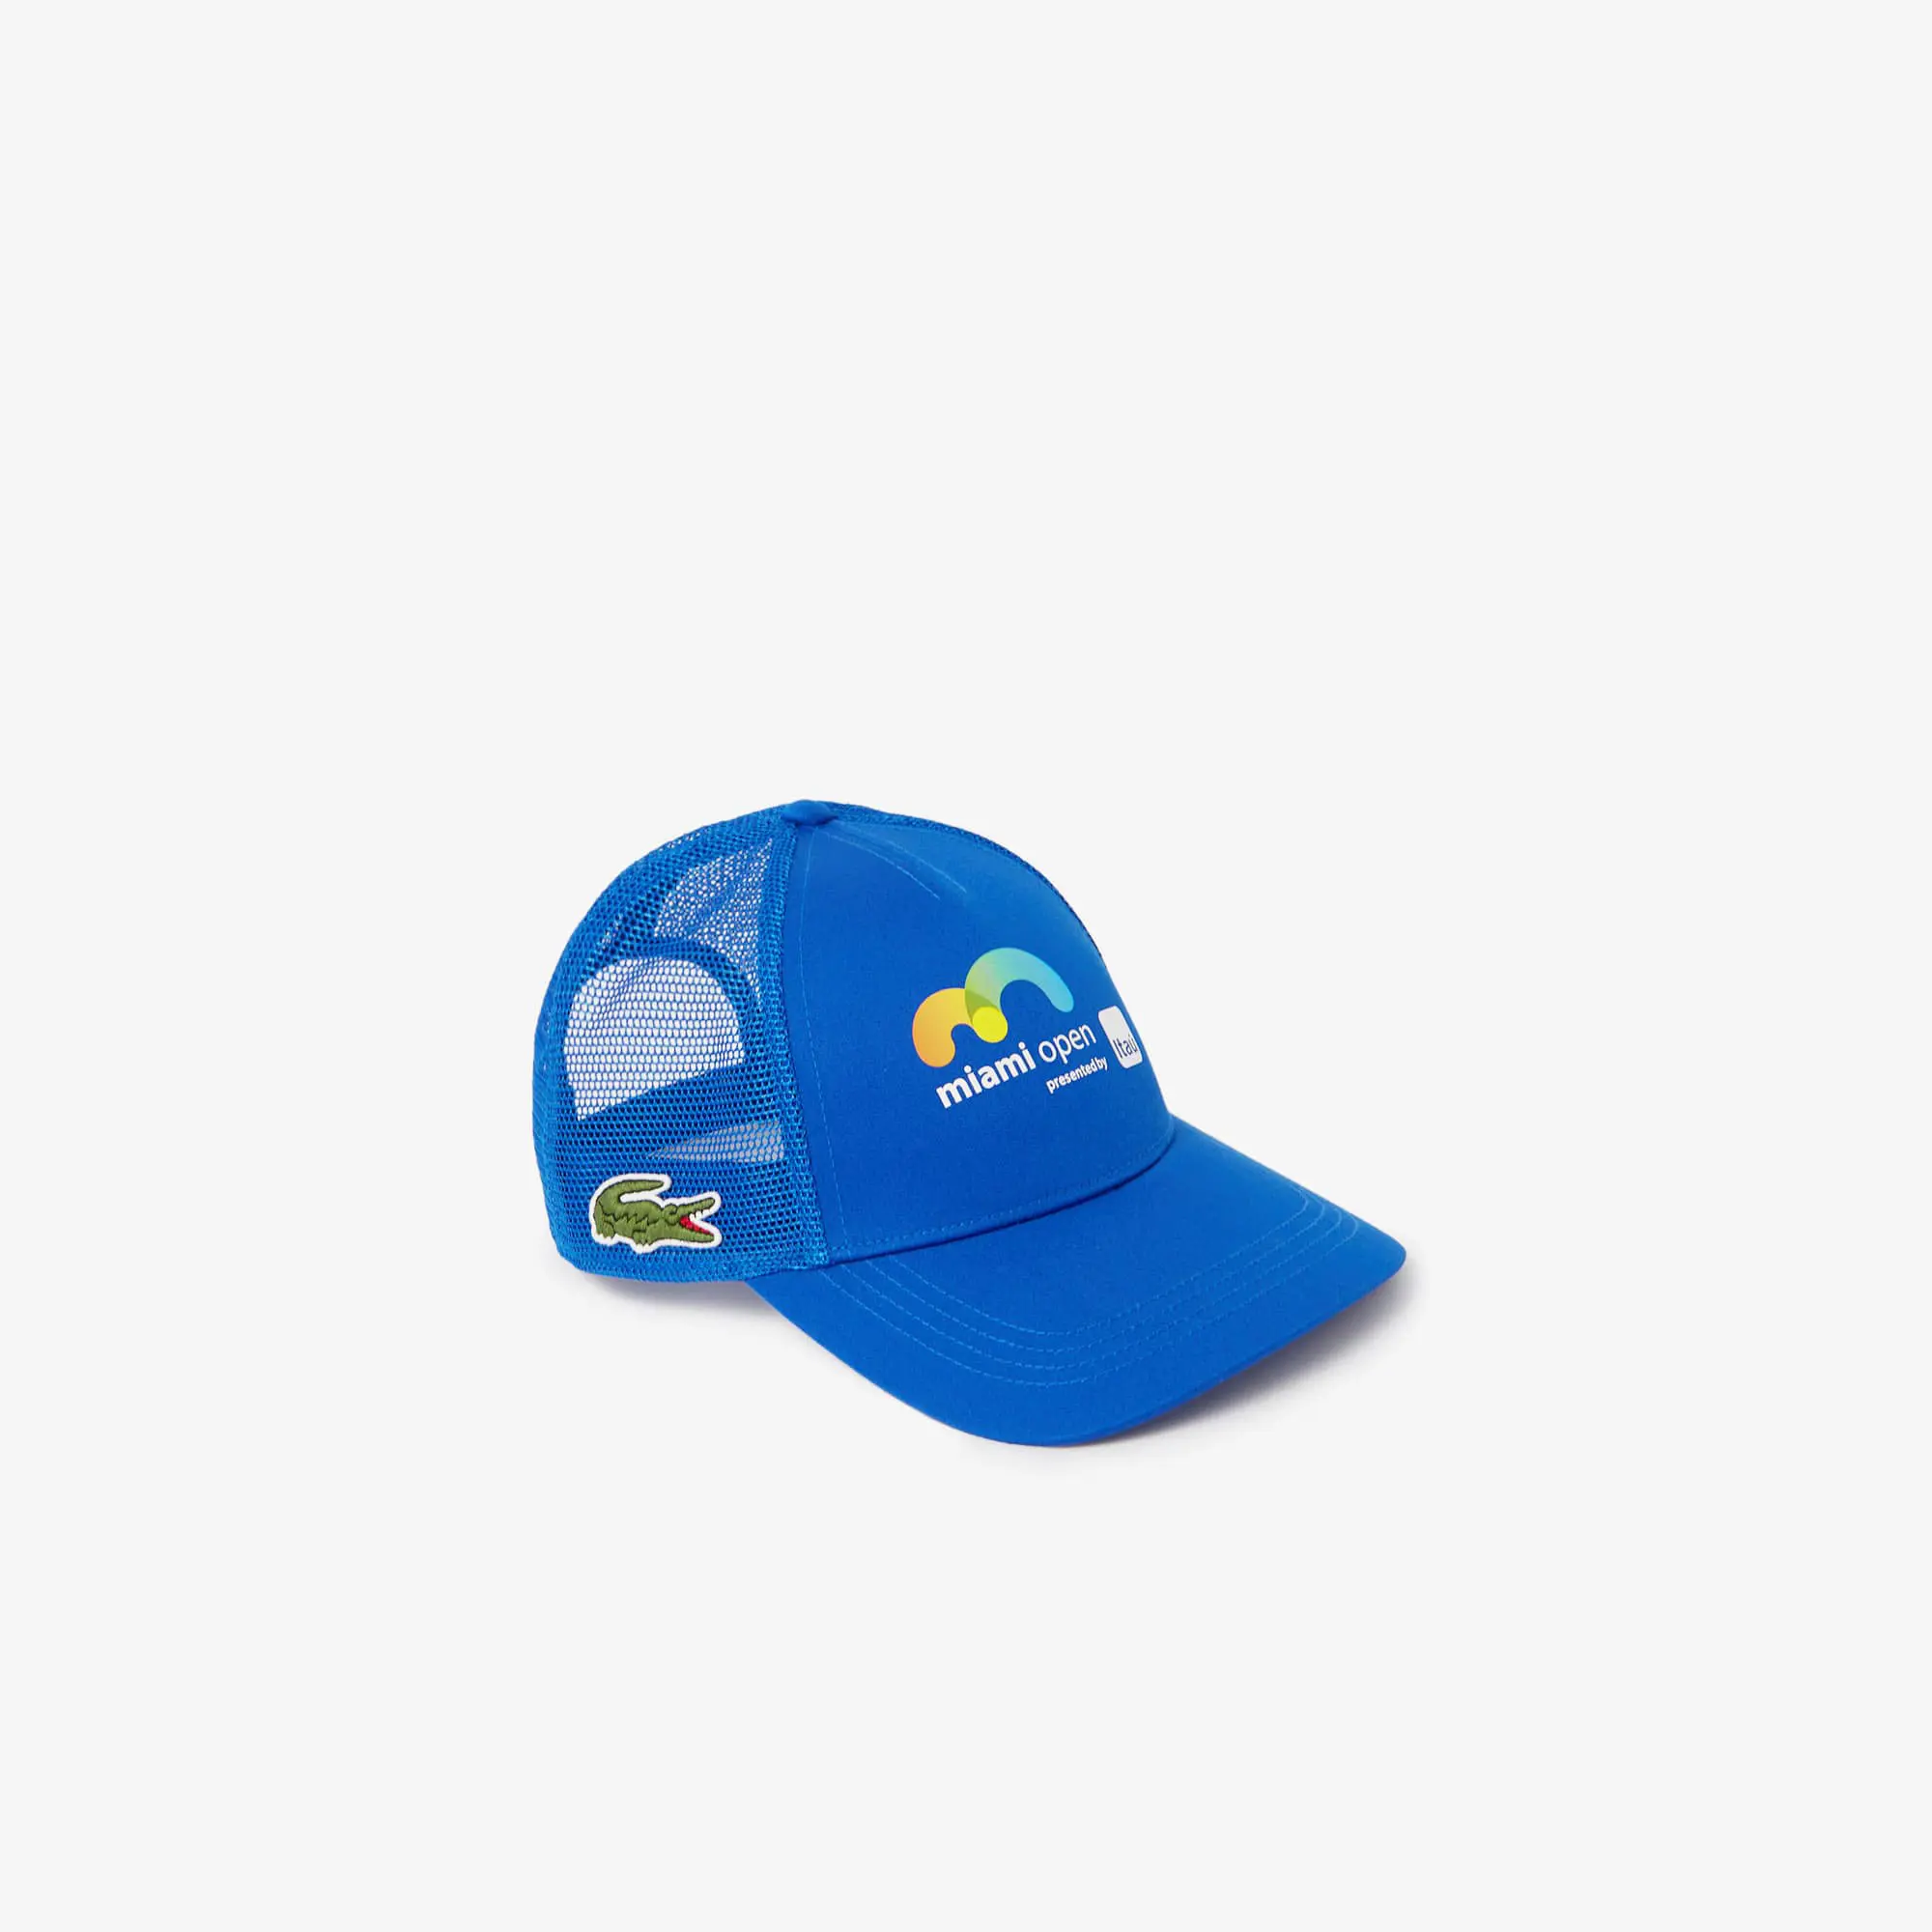 Lacoste Men's Miami Open Hat. 1